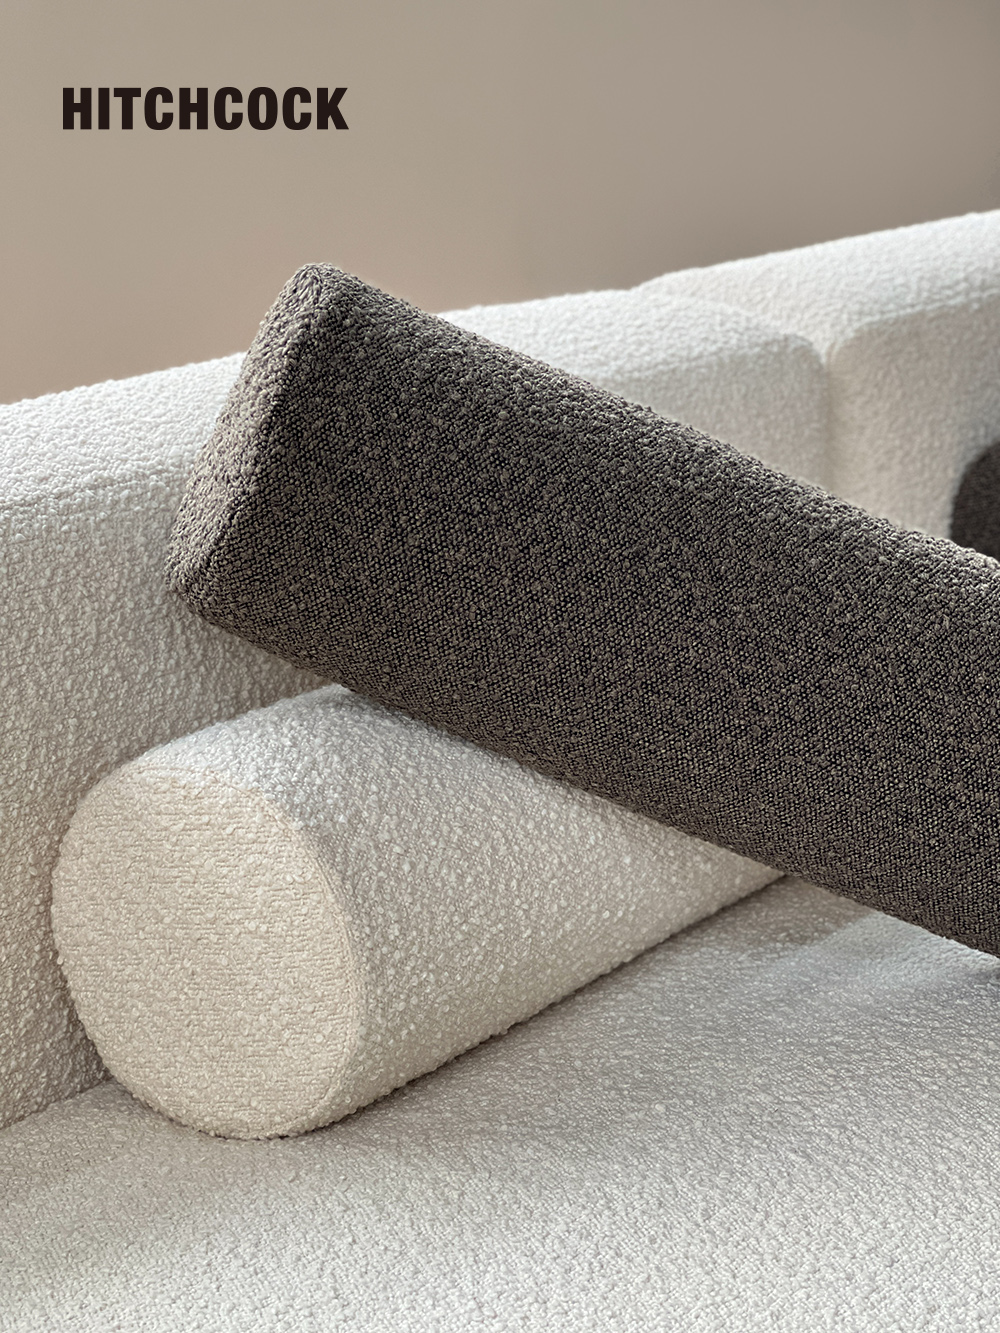 HITCHCOCK Sledge 靠枕 圆柱形抱枕沙发腰枕头枕艺术简约咖啡织物